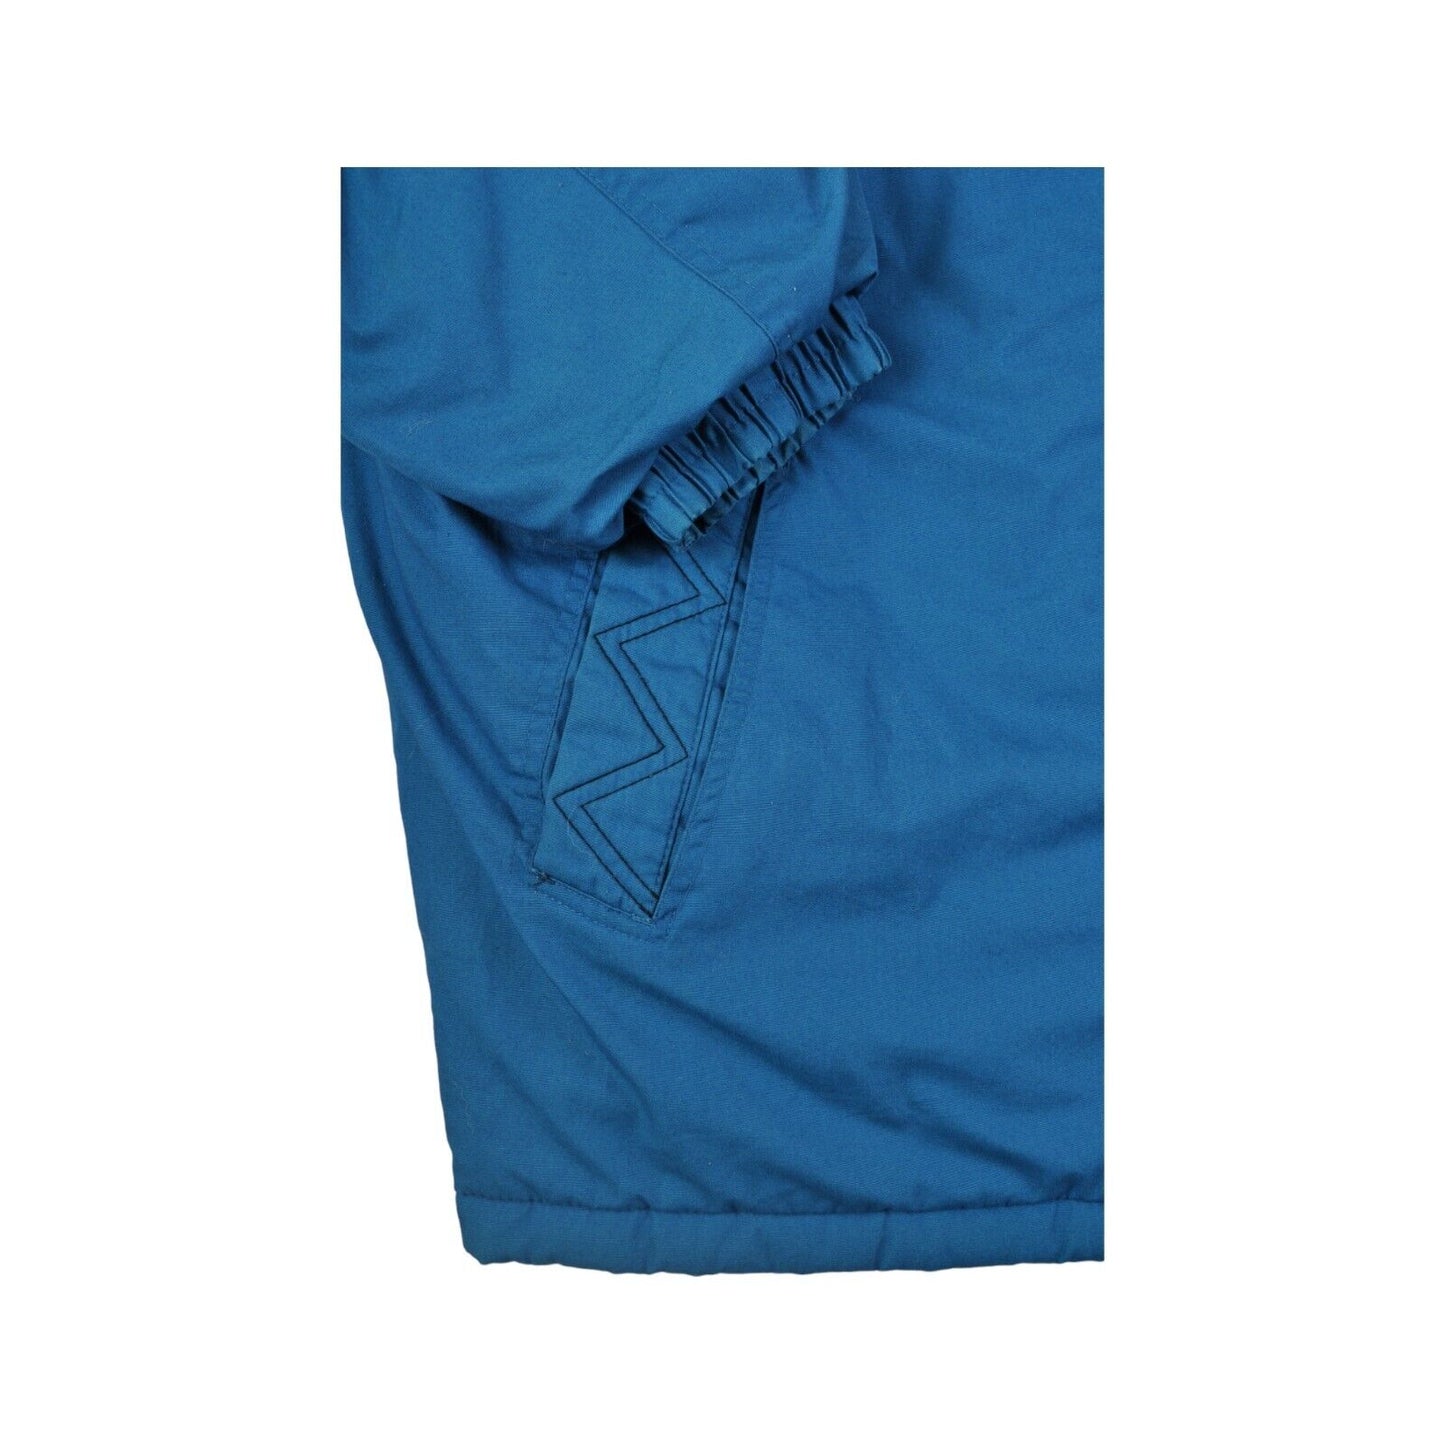 Vintage Ski Jacket 80s Style Blue XL